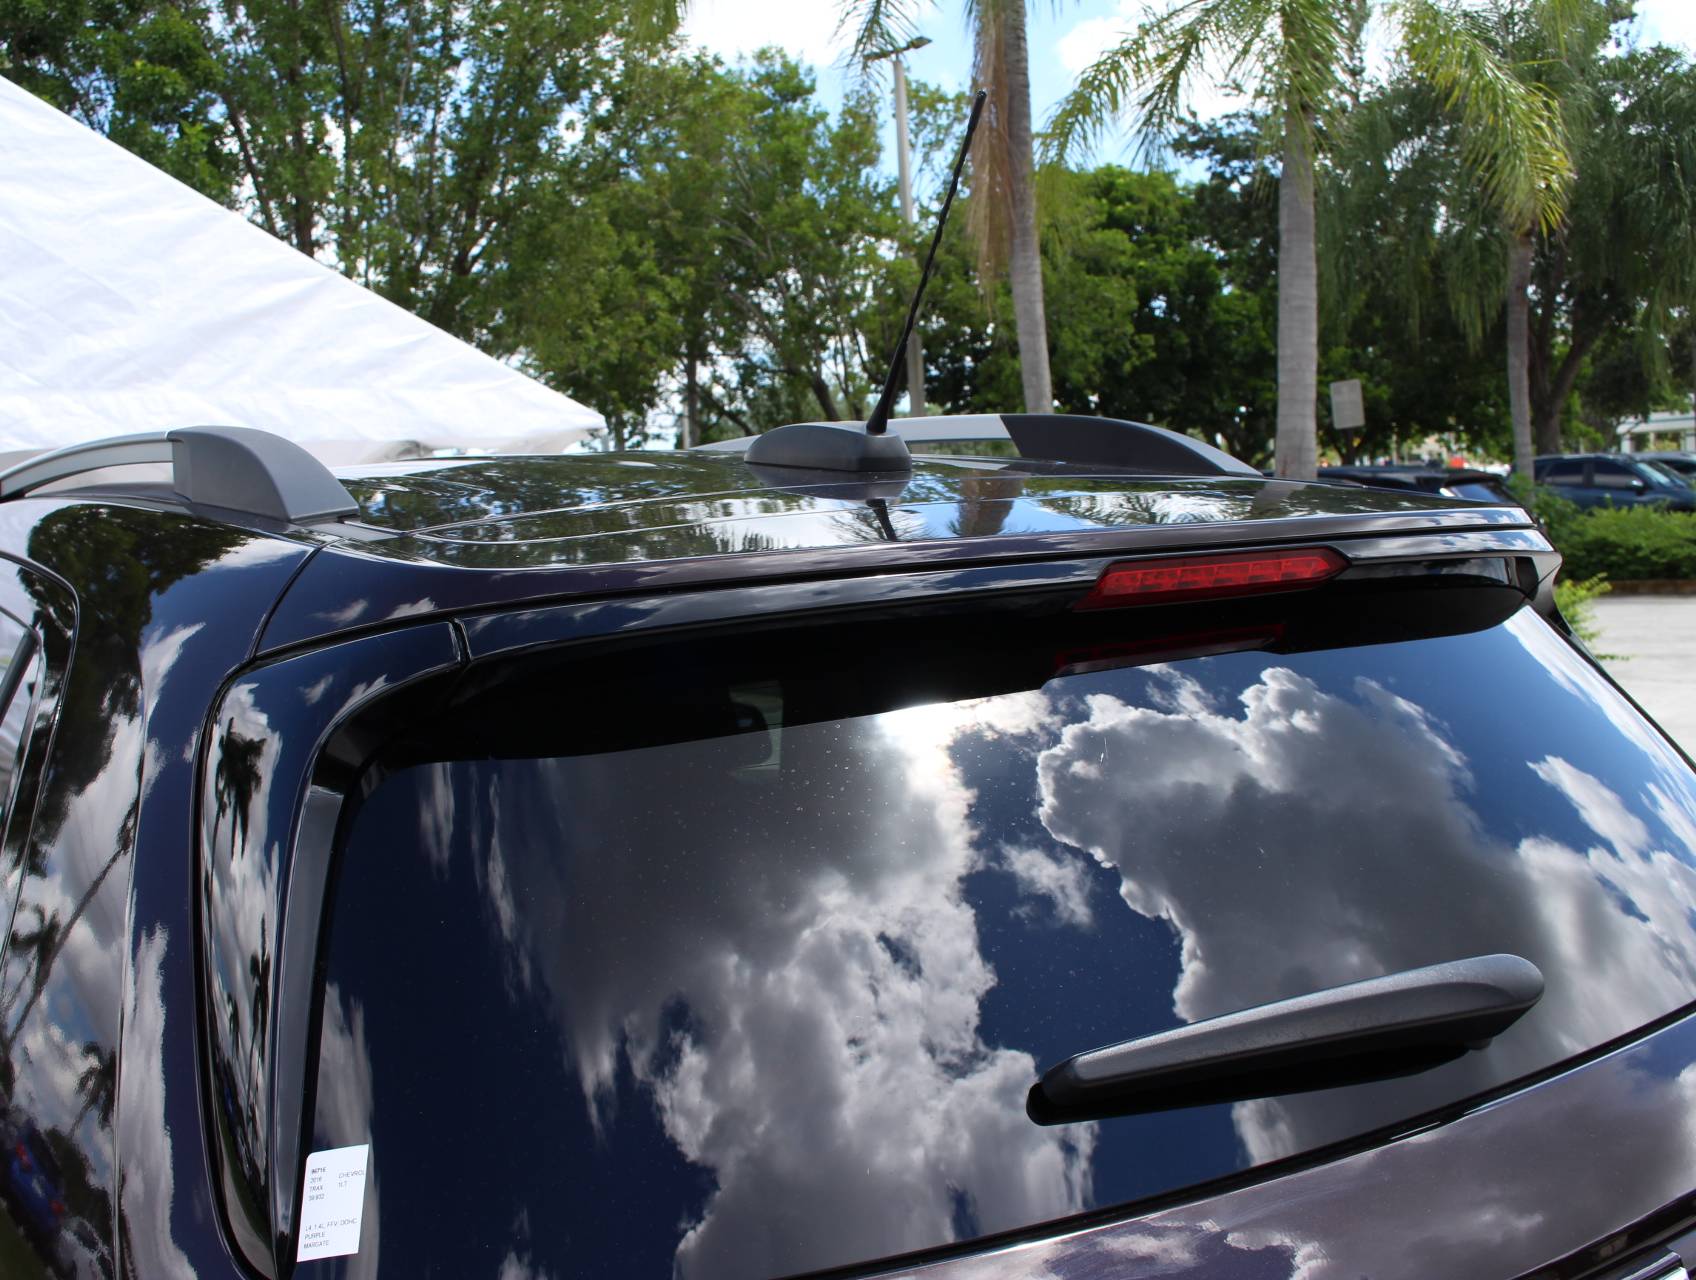 Florida Fine Cars - Used CHEVROLET TRAX 2016 MIAMI 1lt Awd